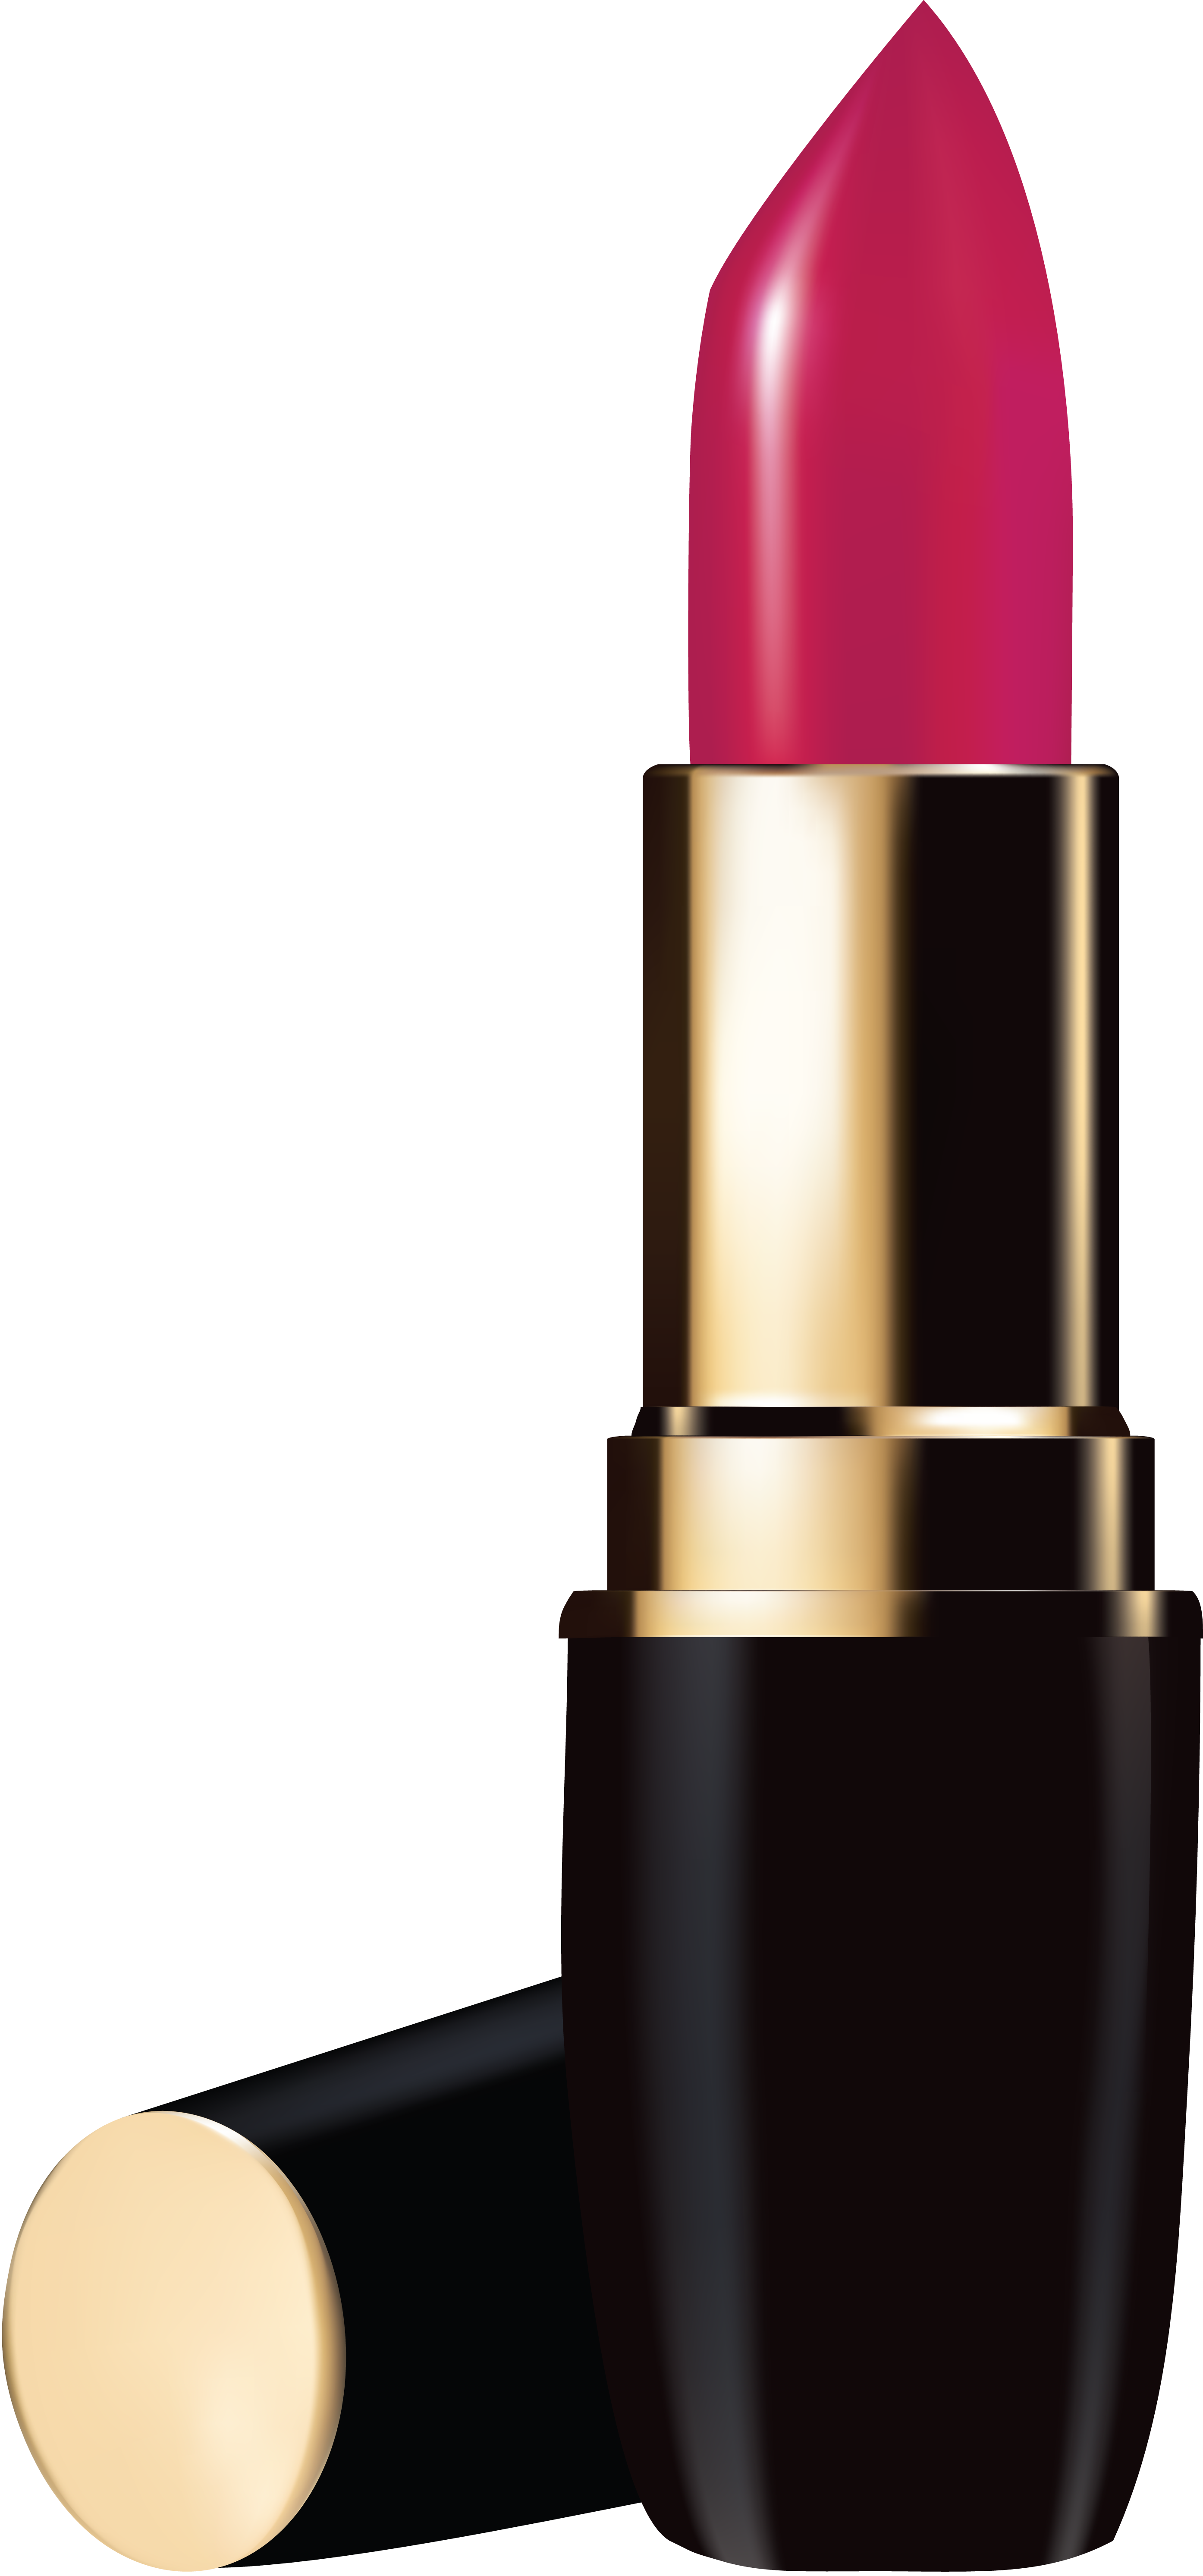 Lipstick Cosmetics Clip Art Lipstick Png Png Download 27895971